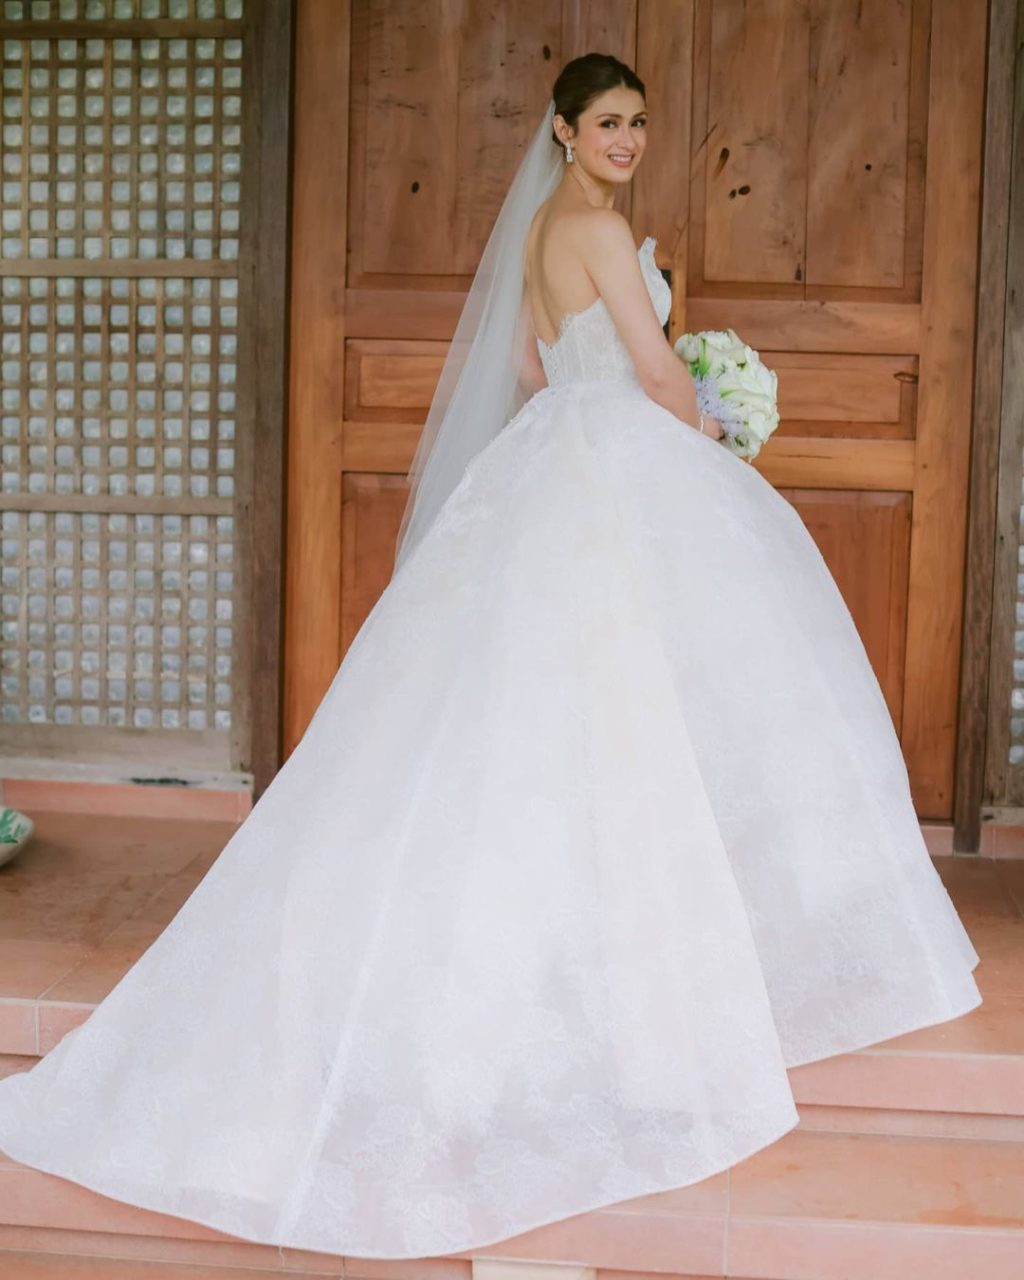 Carla Abellana in her wedding dress.